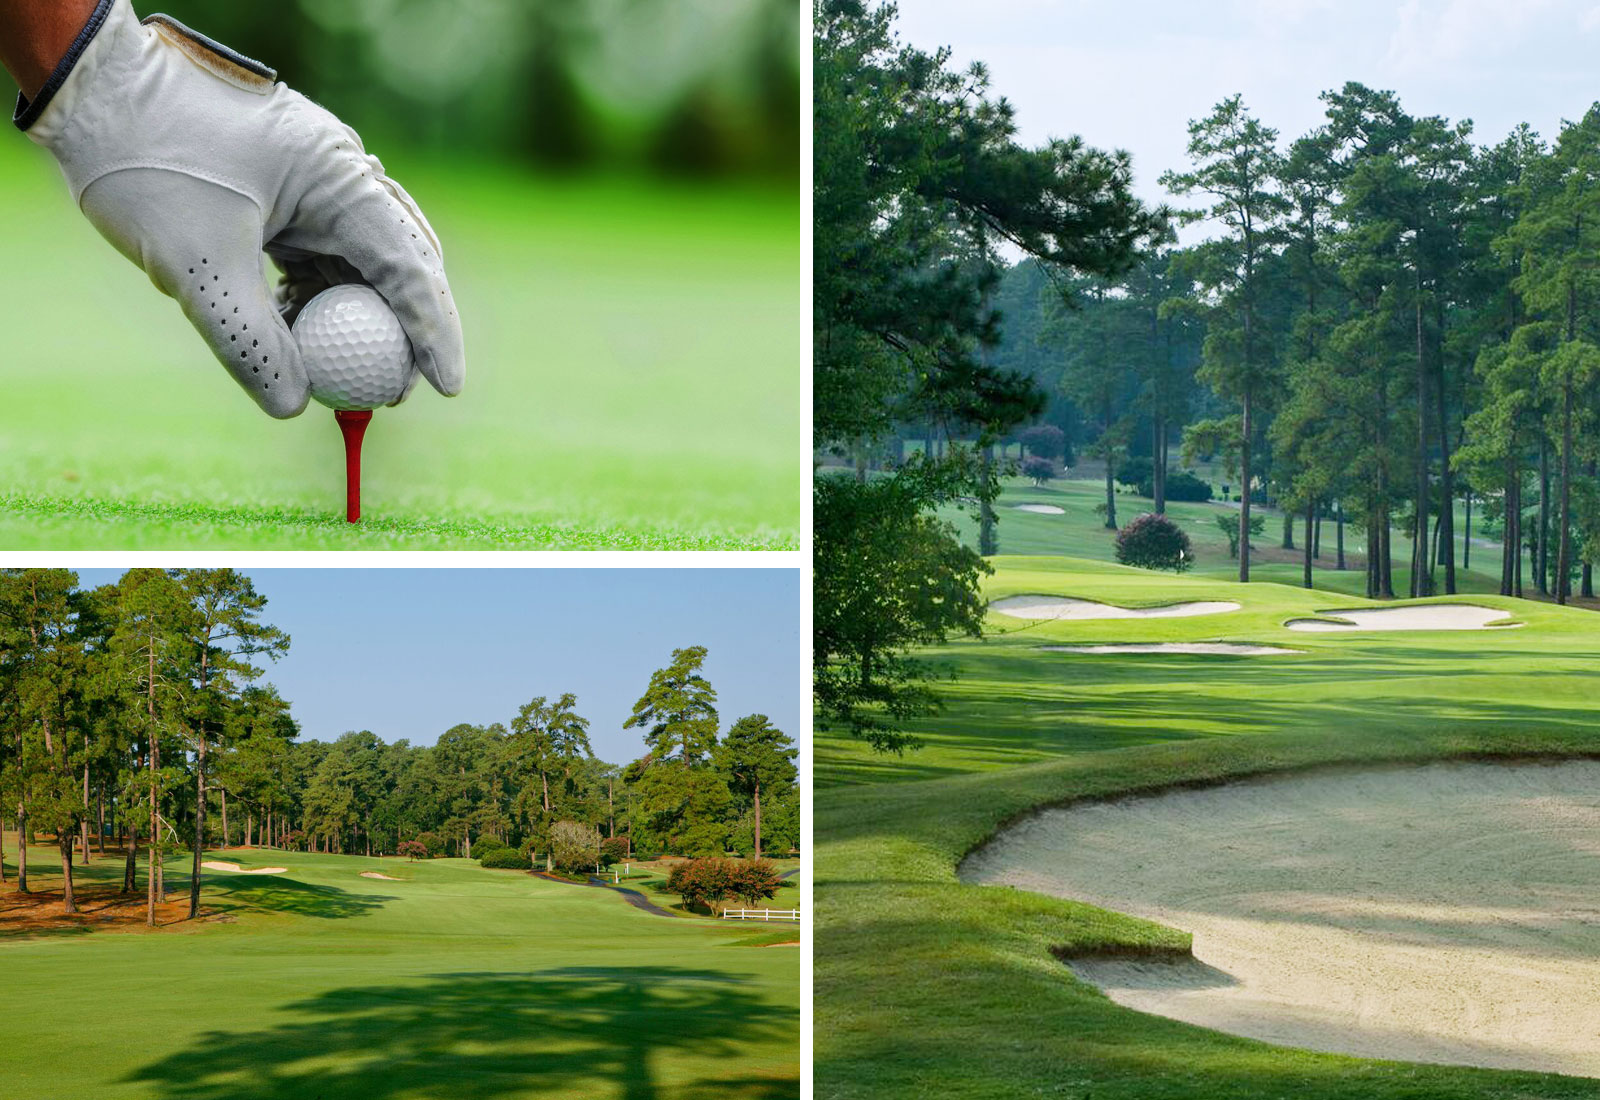 Play a round of golf at Forest Hills Golf Club or Gordon Lakes Golf Club